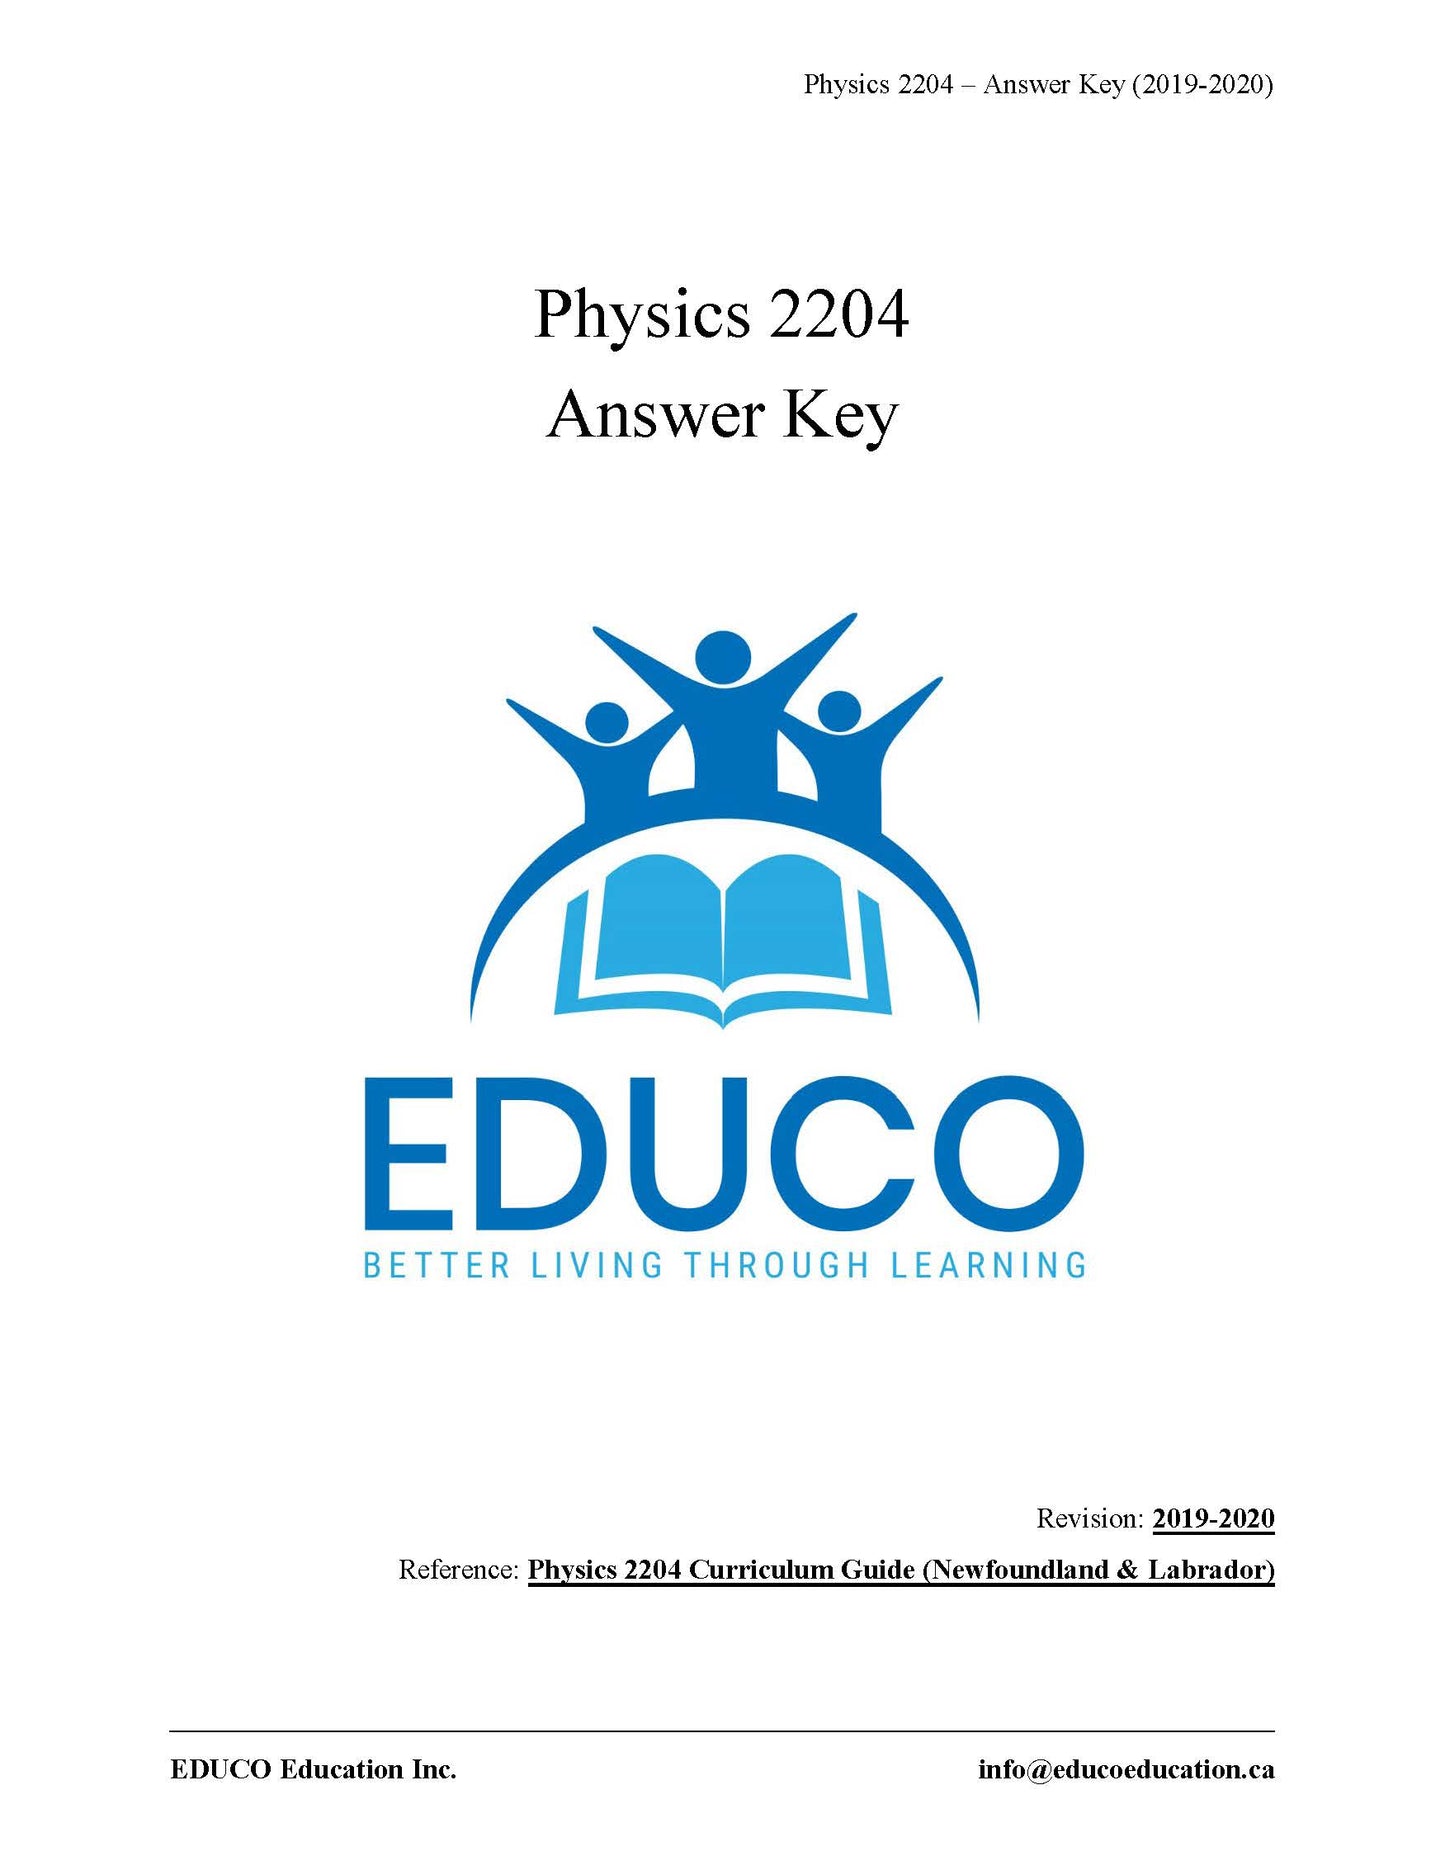 Physics 2204 (Physical Workbook)